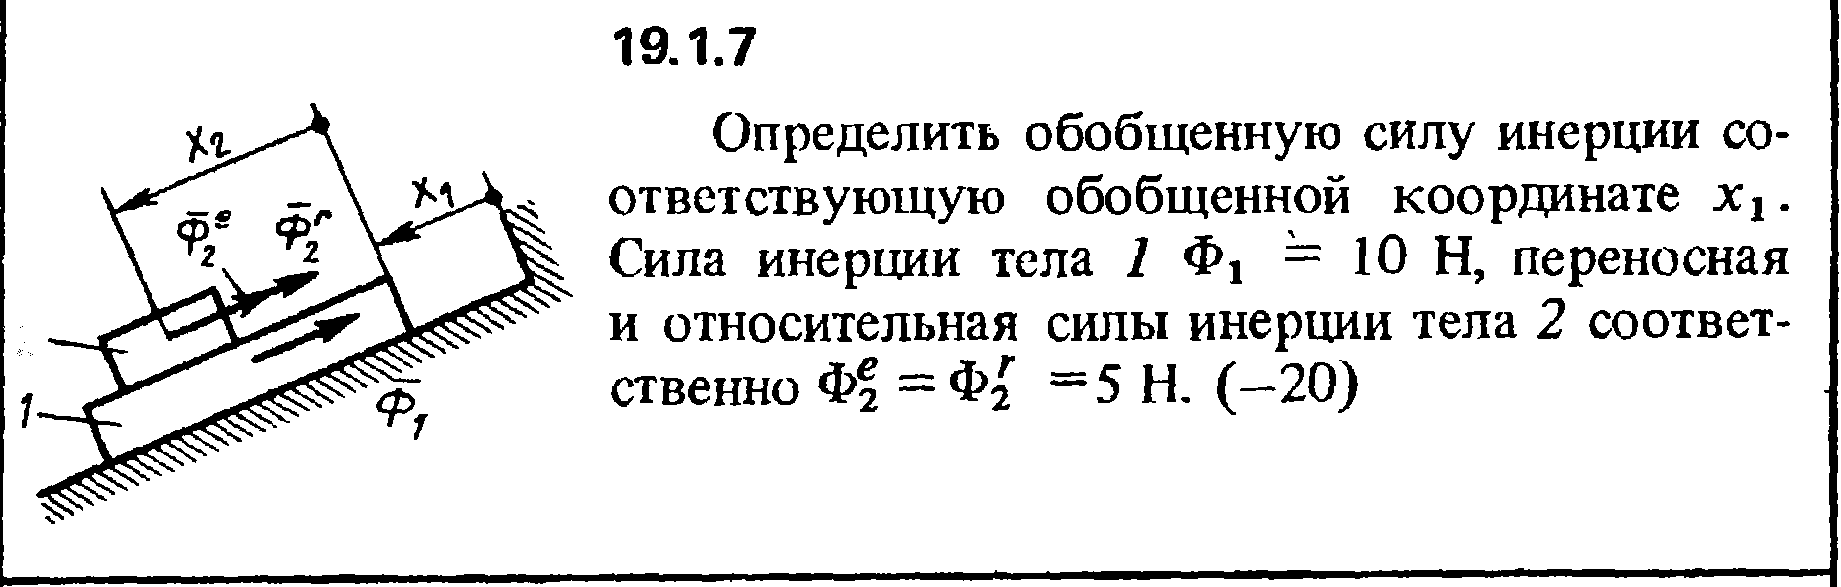 Решение 19.1.7 из сборника (решебника) Кепе О.Е. 1989 г